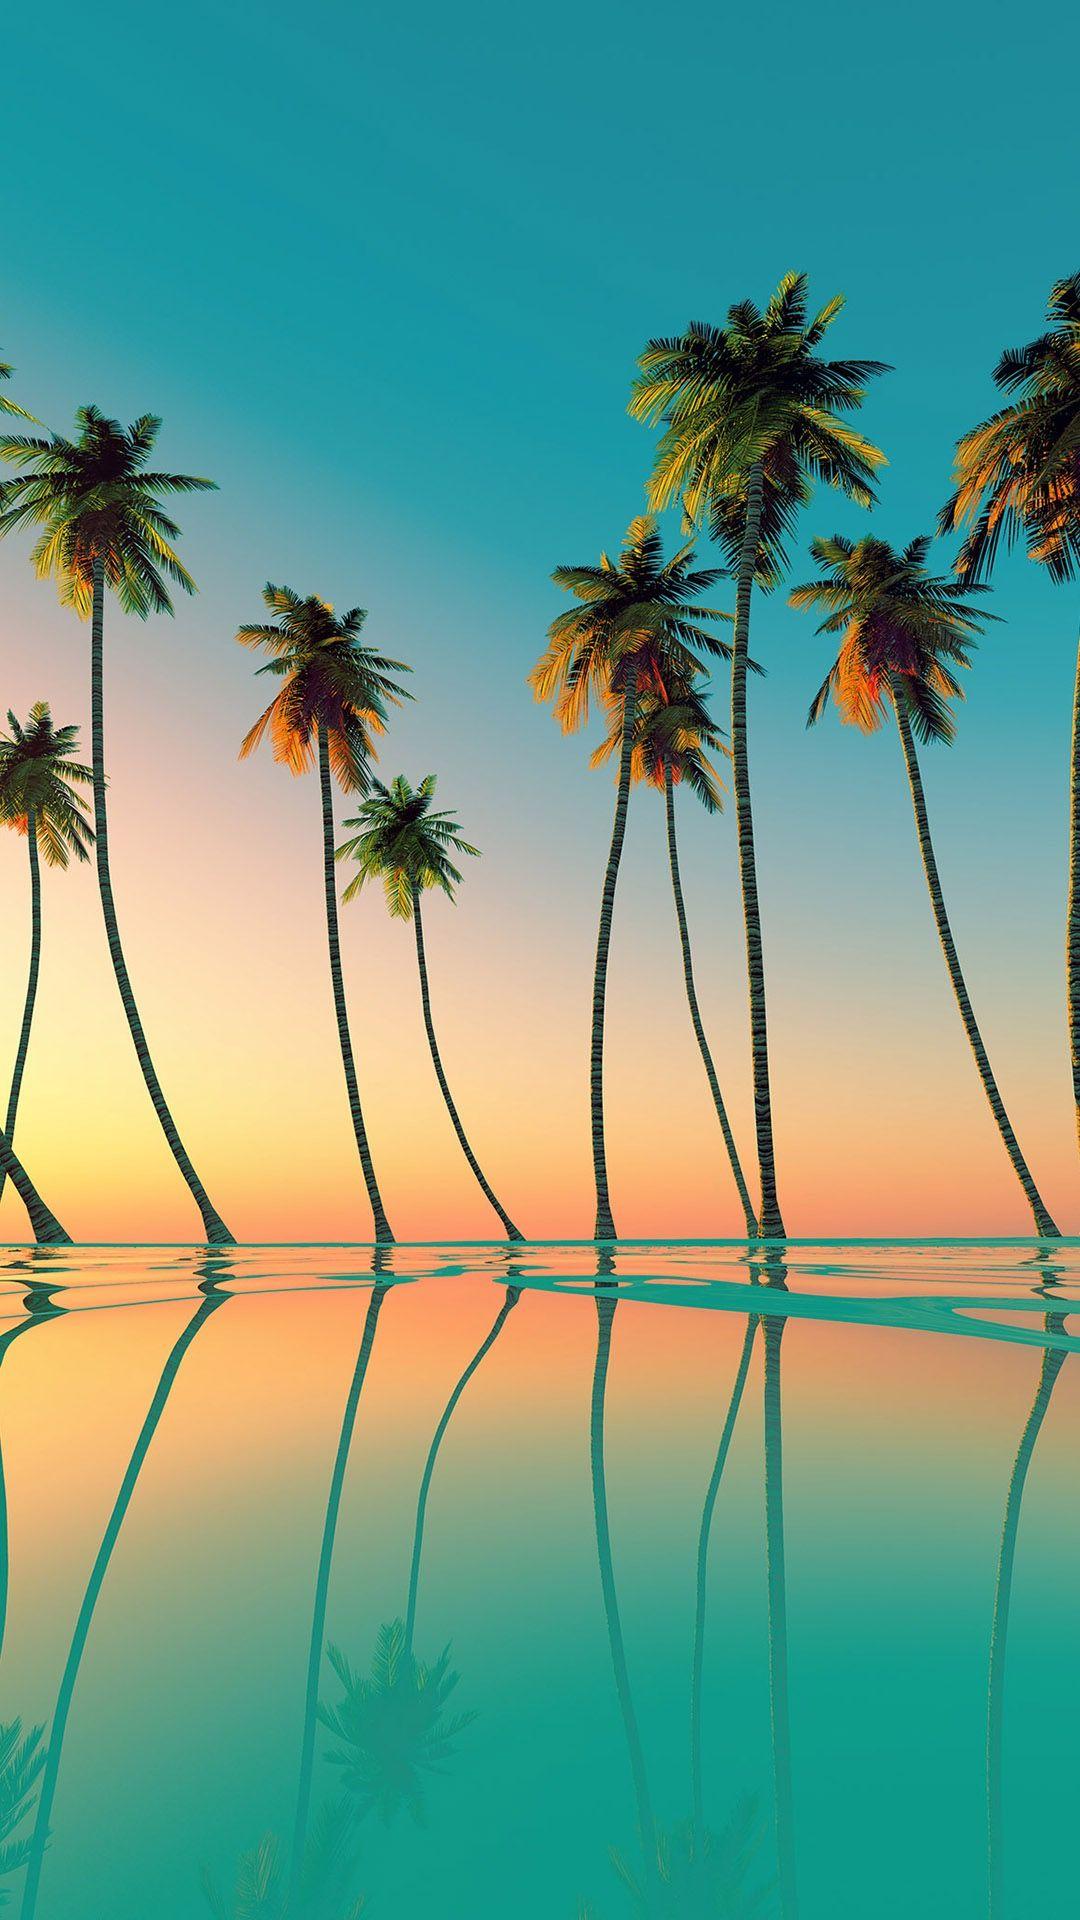 Hình ảnh cây dừa đẹp bên biển xanh